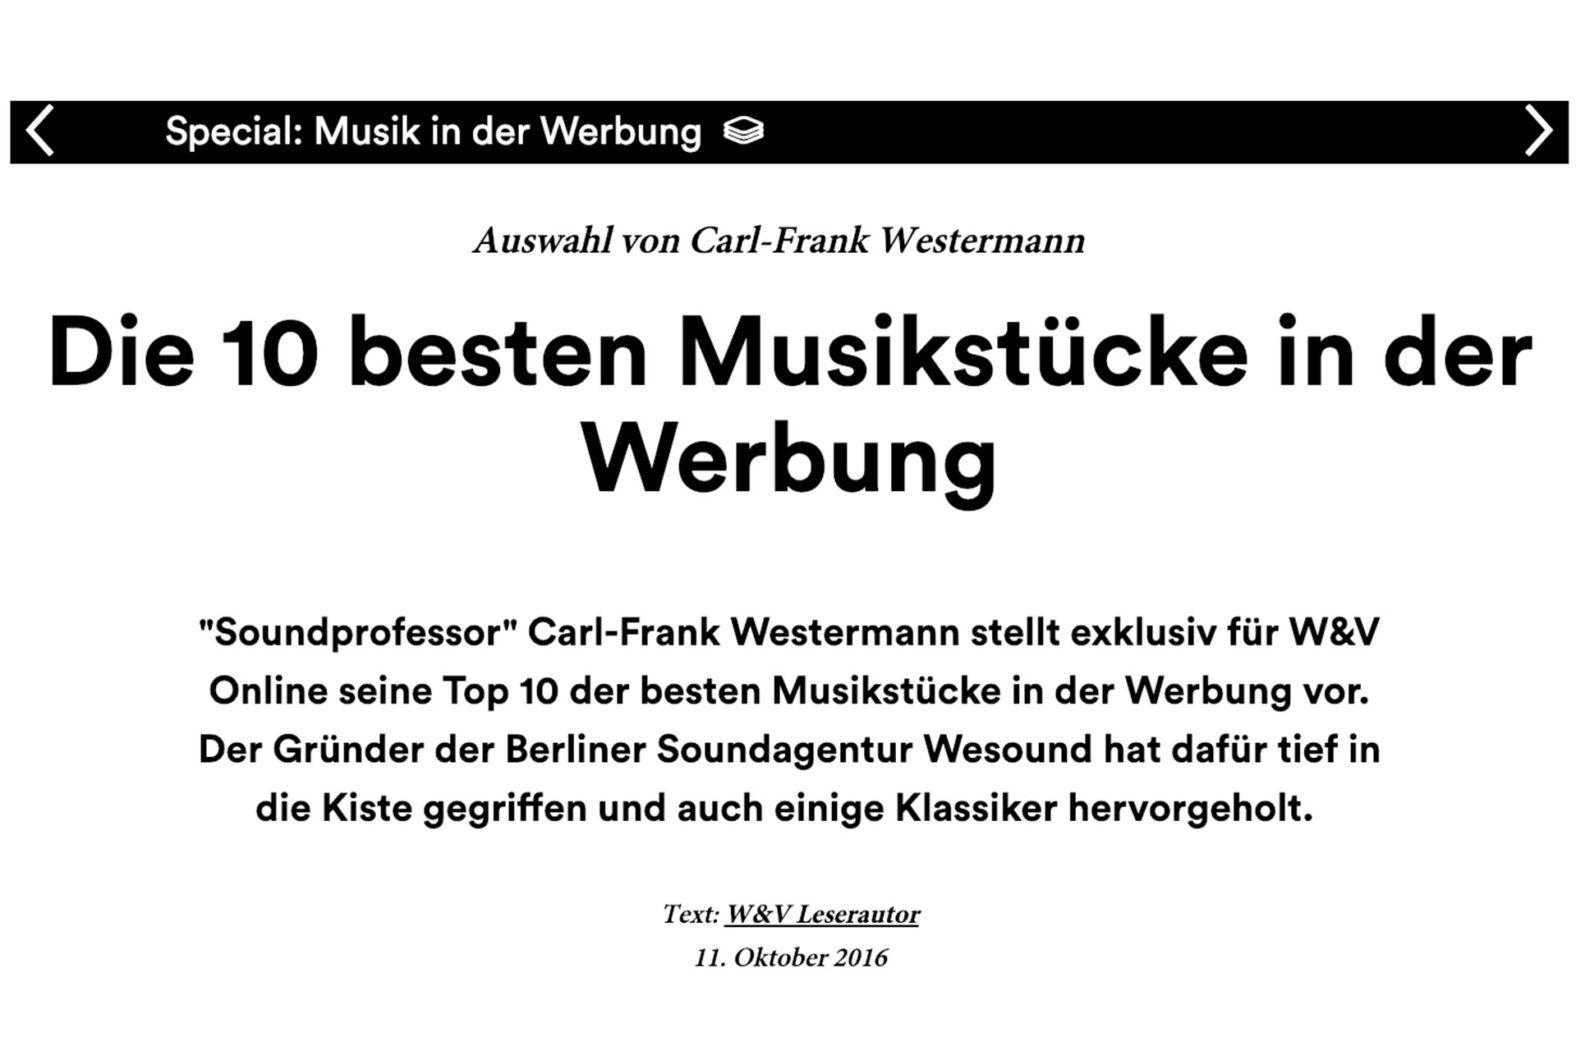 Carl-Frank-Westermann.WundV.Top10.Musik.Sound